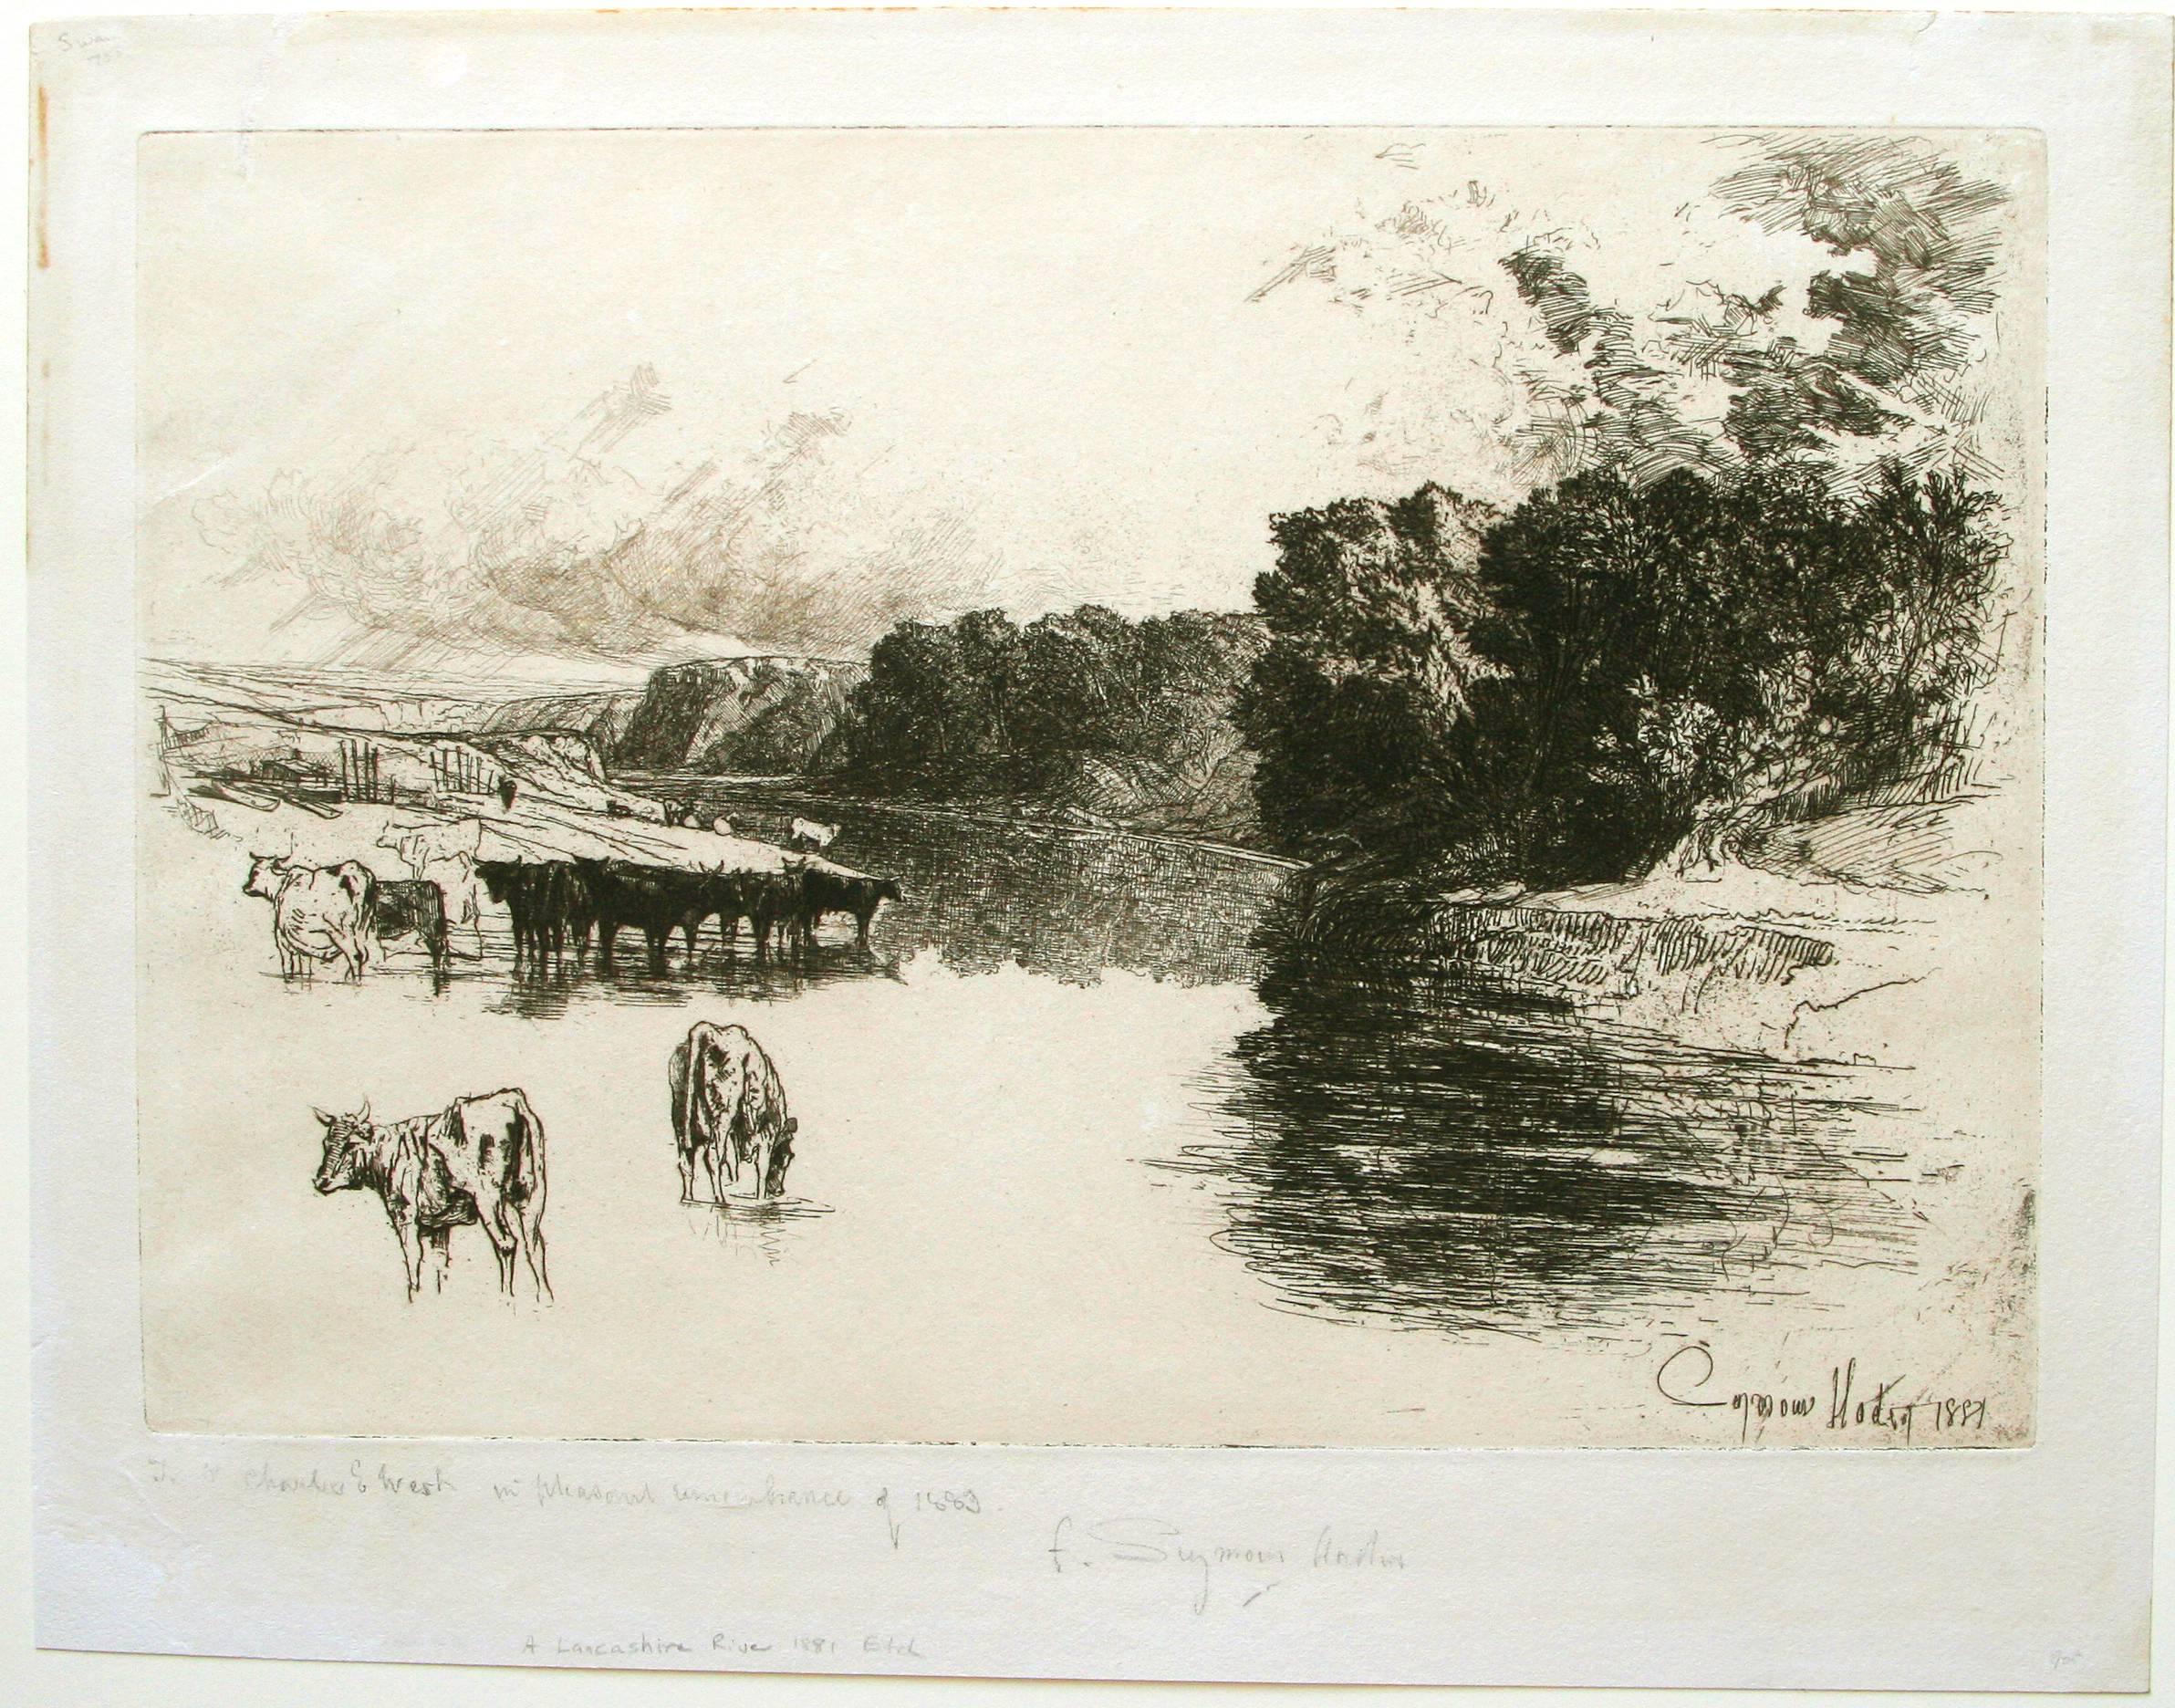 A Lancashire River. - Print by Sir Francis Seymour Haden, R.A.